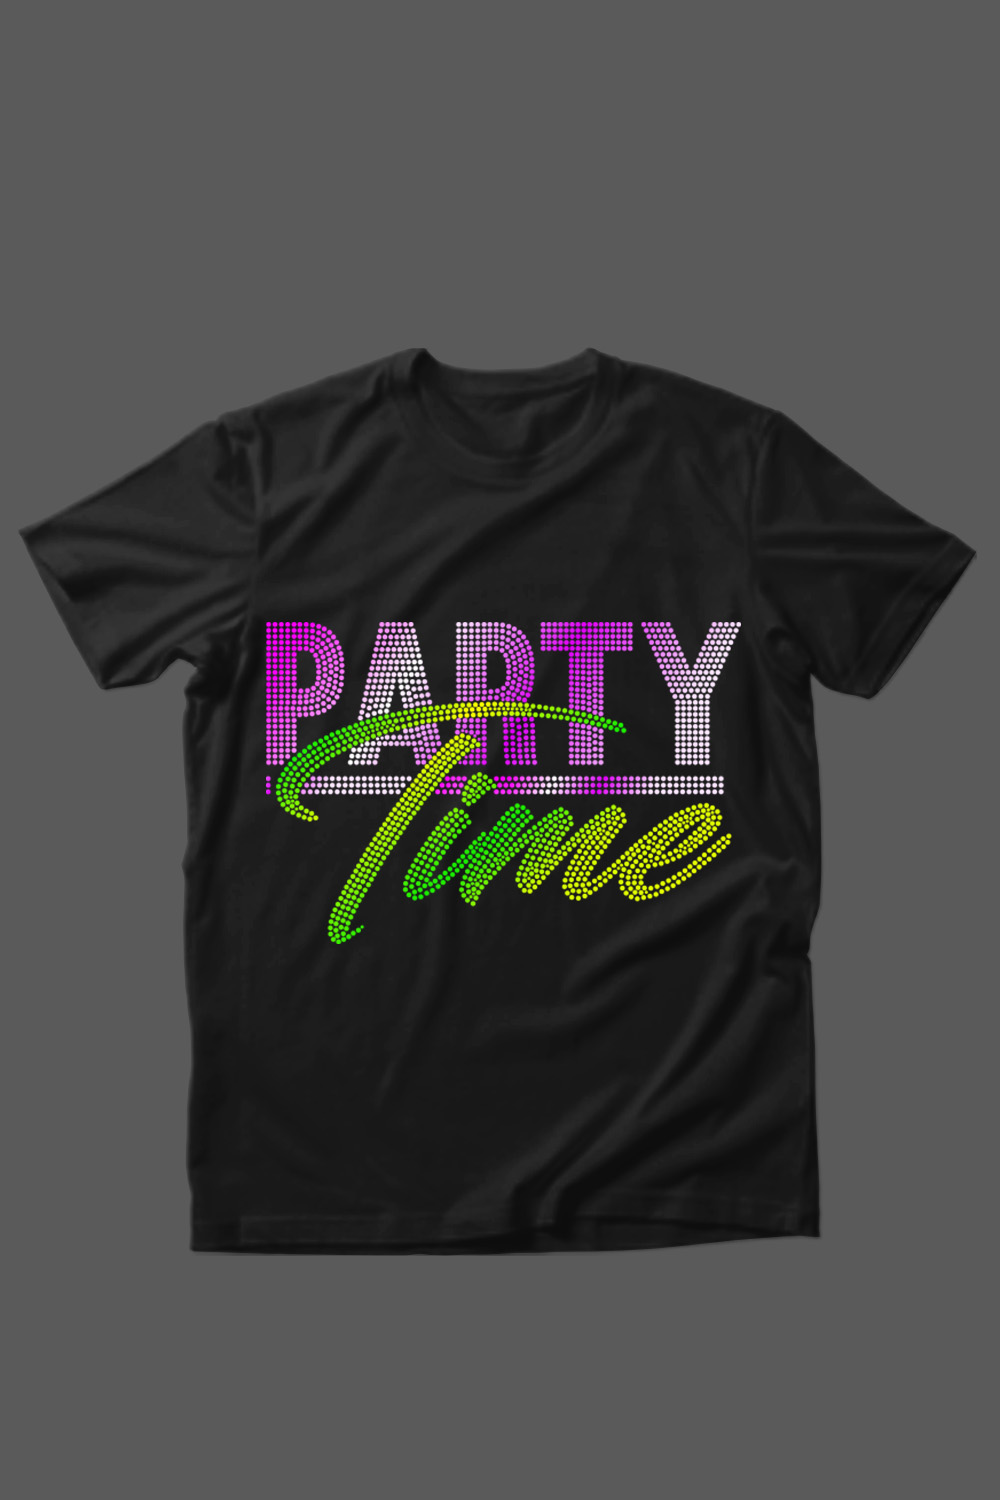 Party Time Rhinestone Templates Design pinterest image.